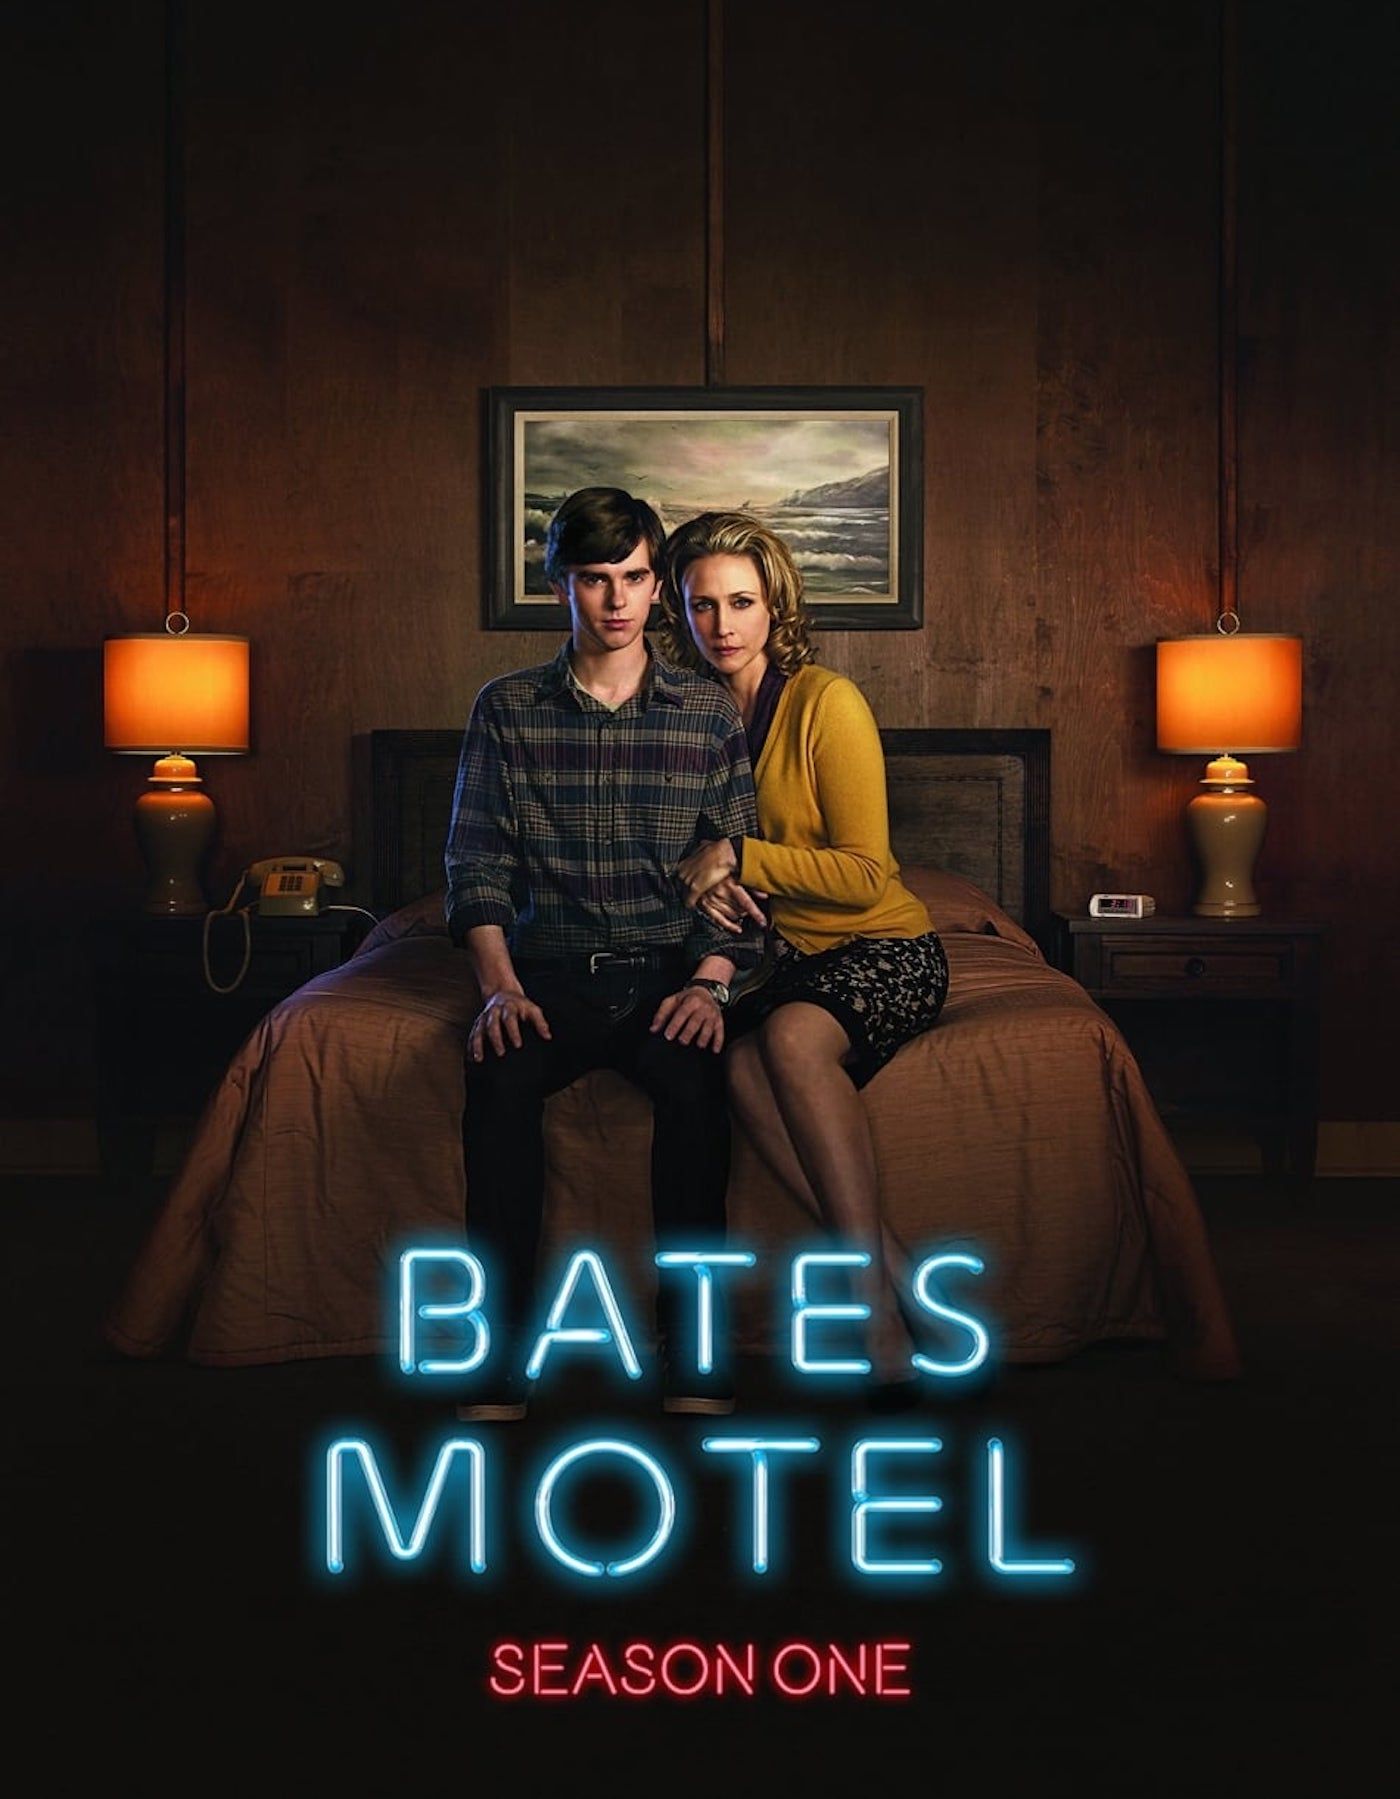 Bates Motel Poster